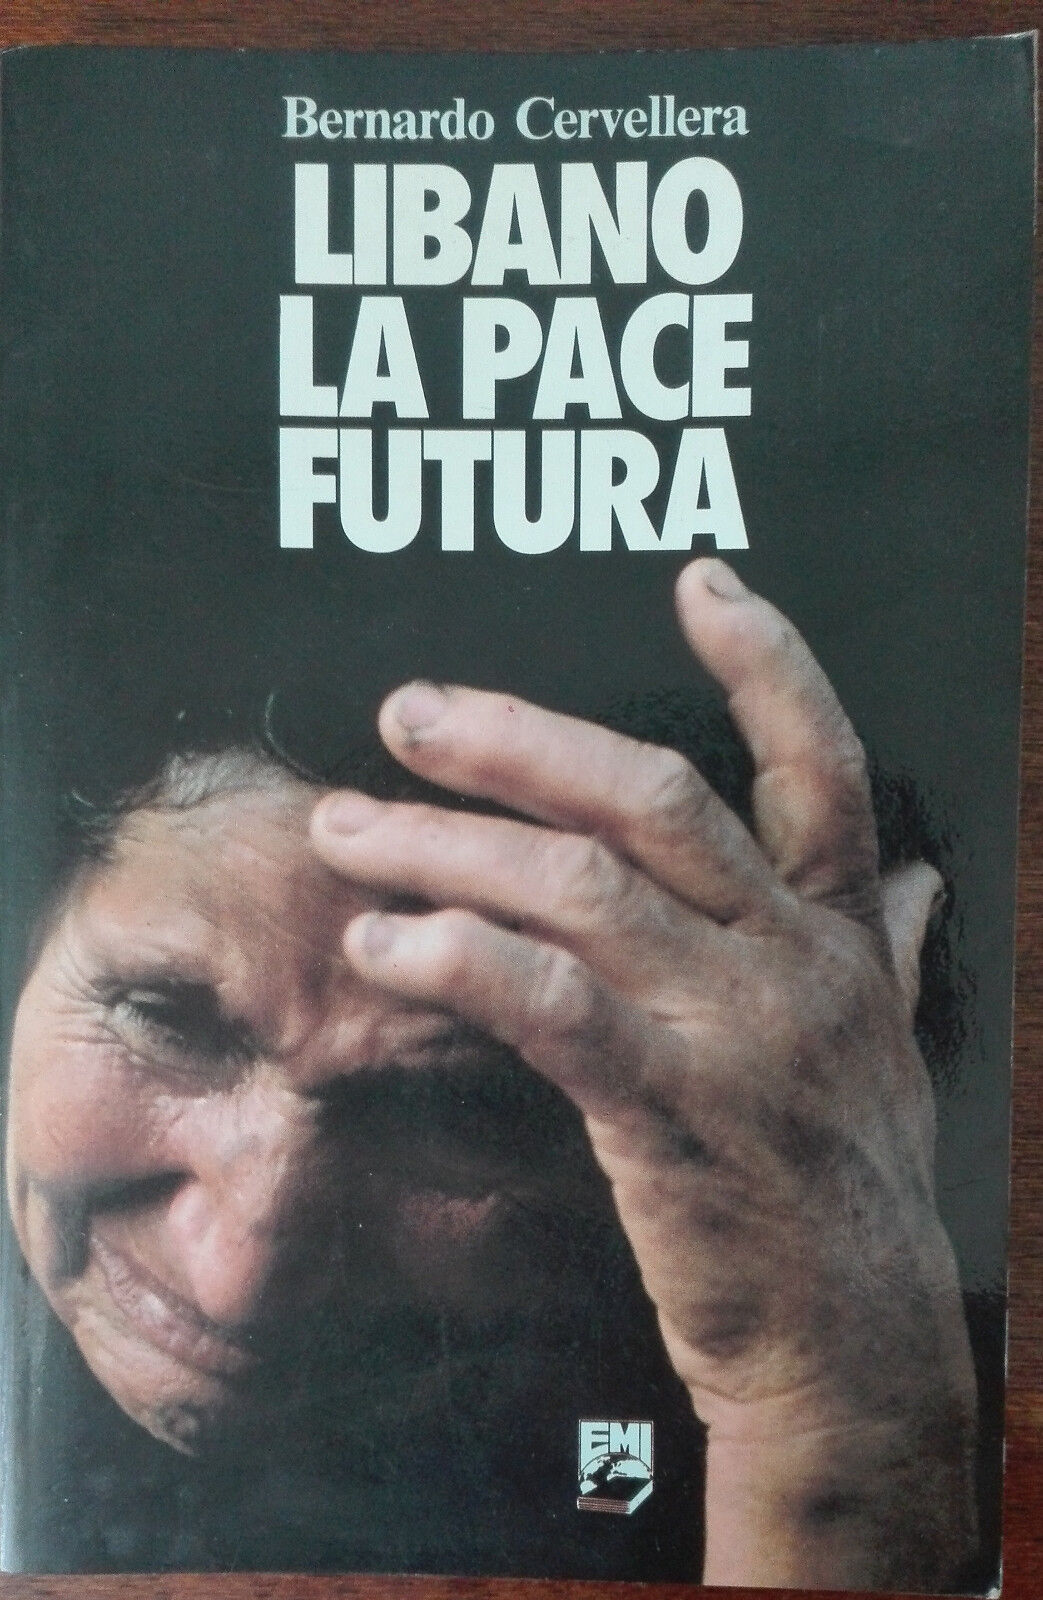 Libano la pace futura - Bernardo Cervellera - Emi,1988 - A